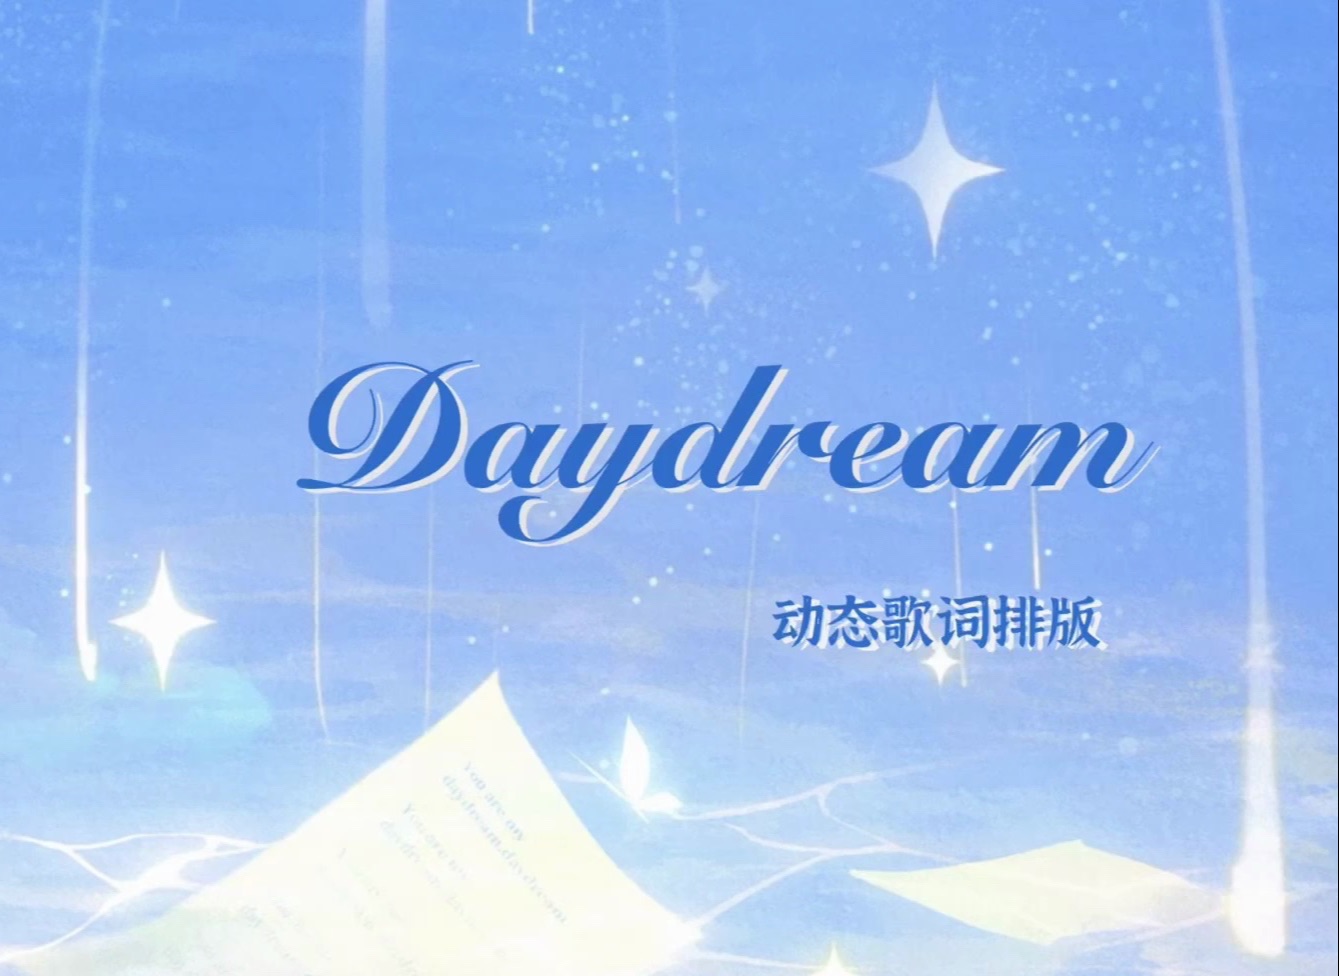 【动态歌词排版】Daydream｜“You are my daydream, daydream”